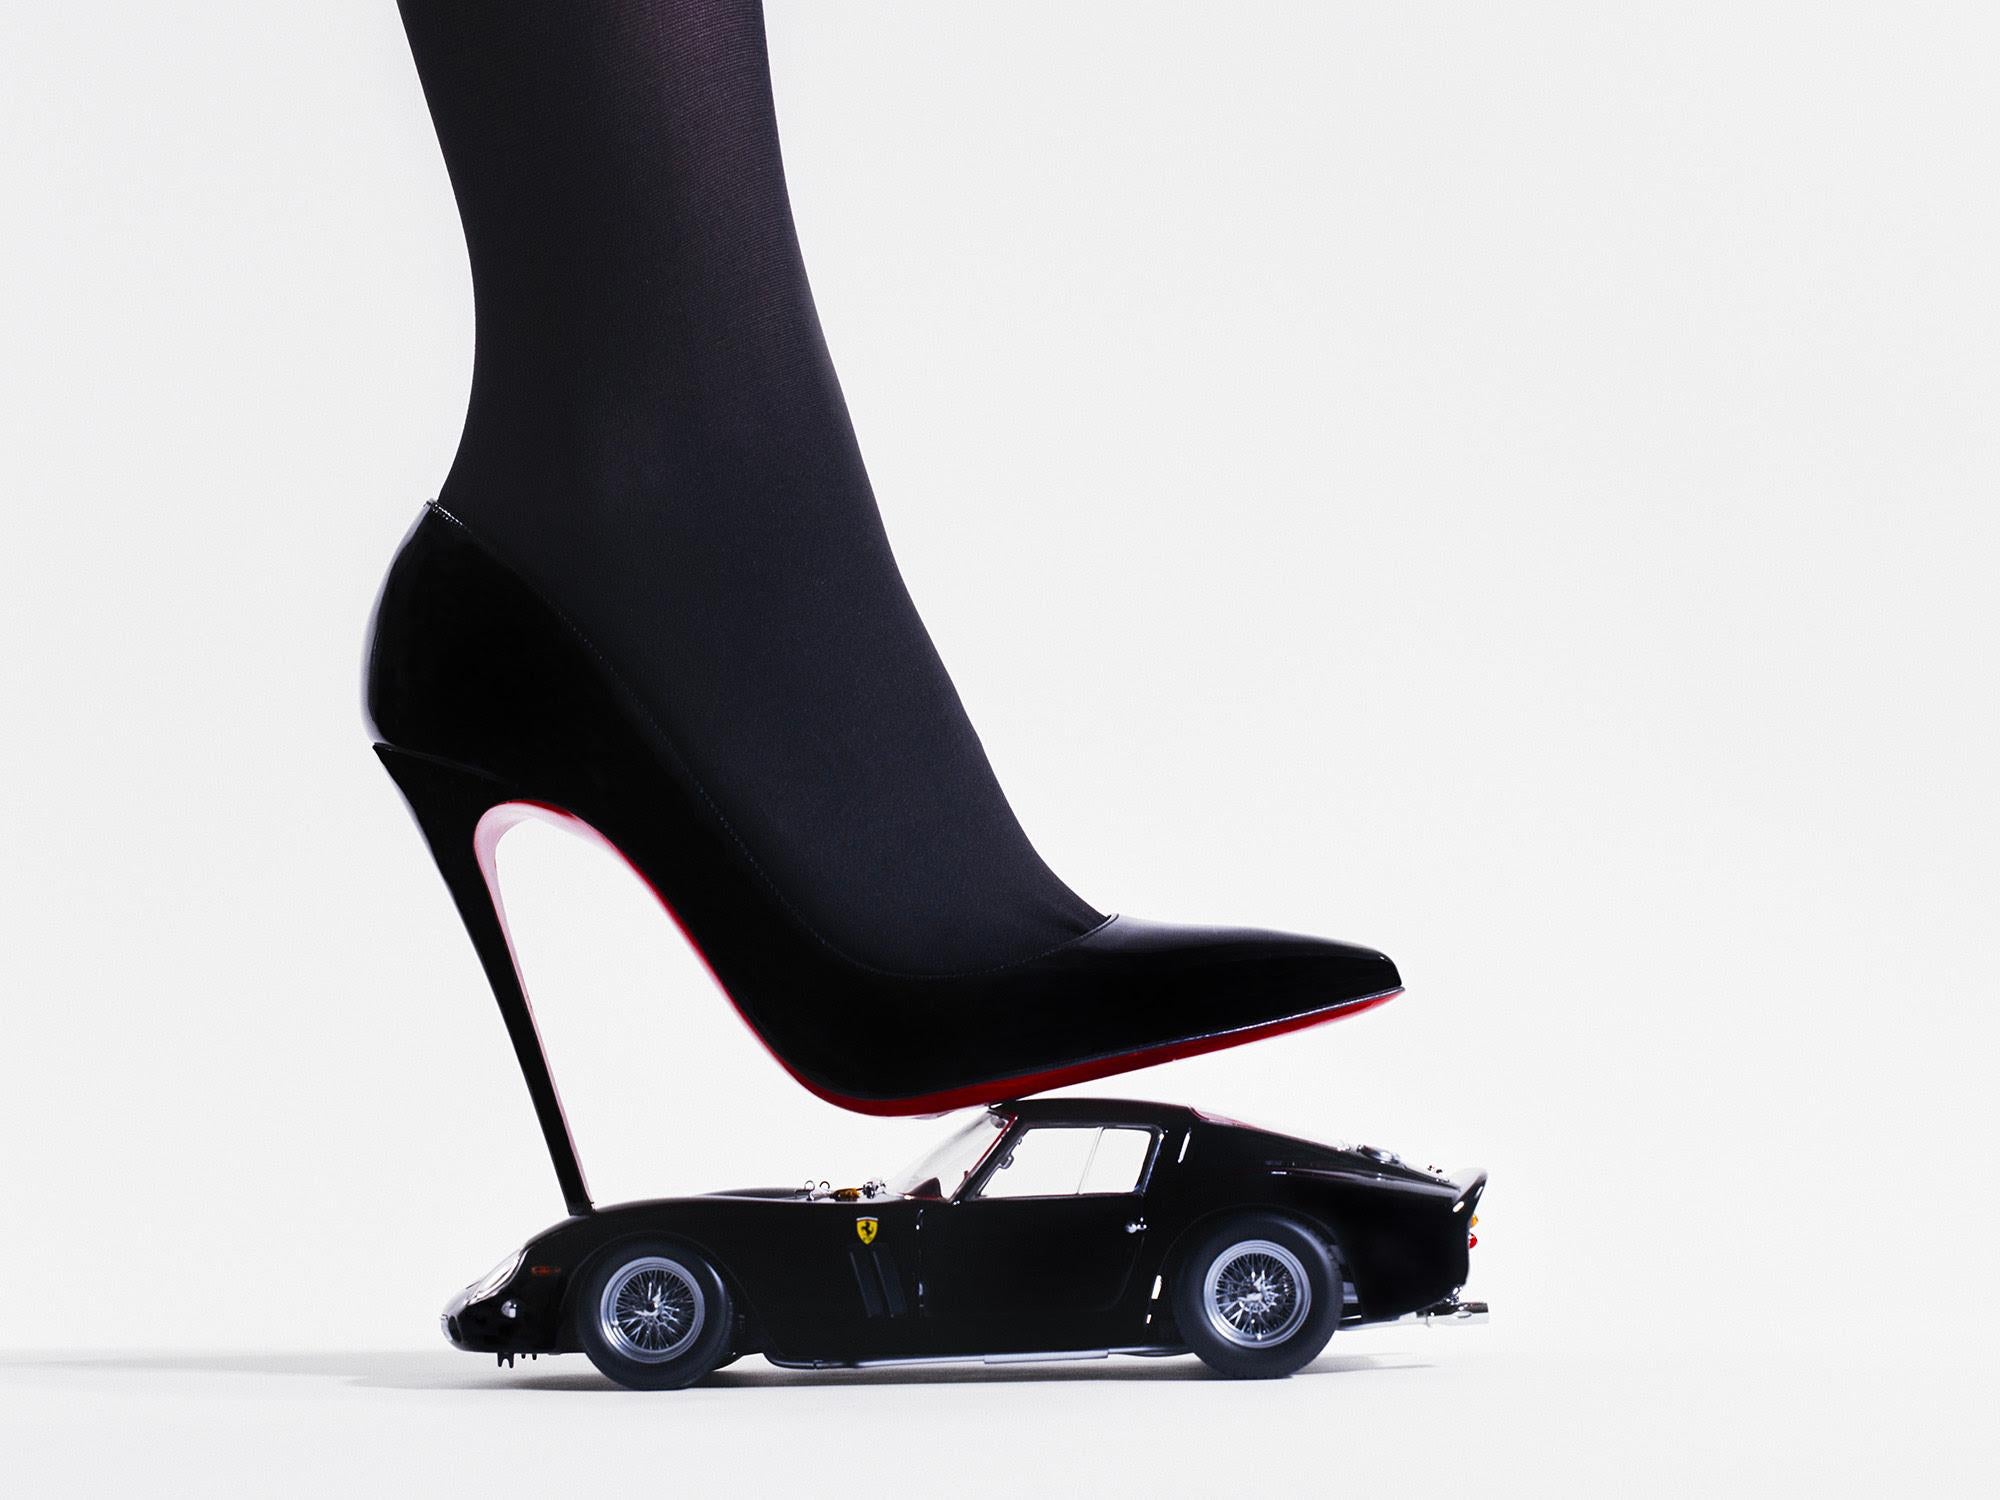 Tyler Shields Black and White Photograph - Ferrari High Heel (15" x 20")